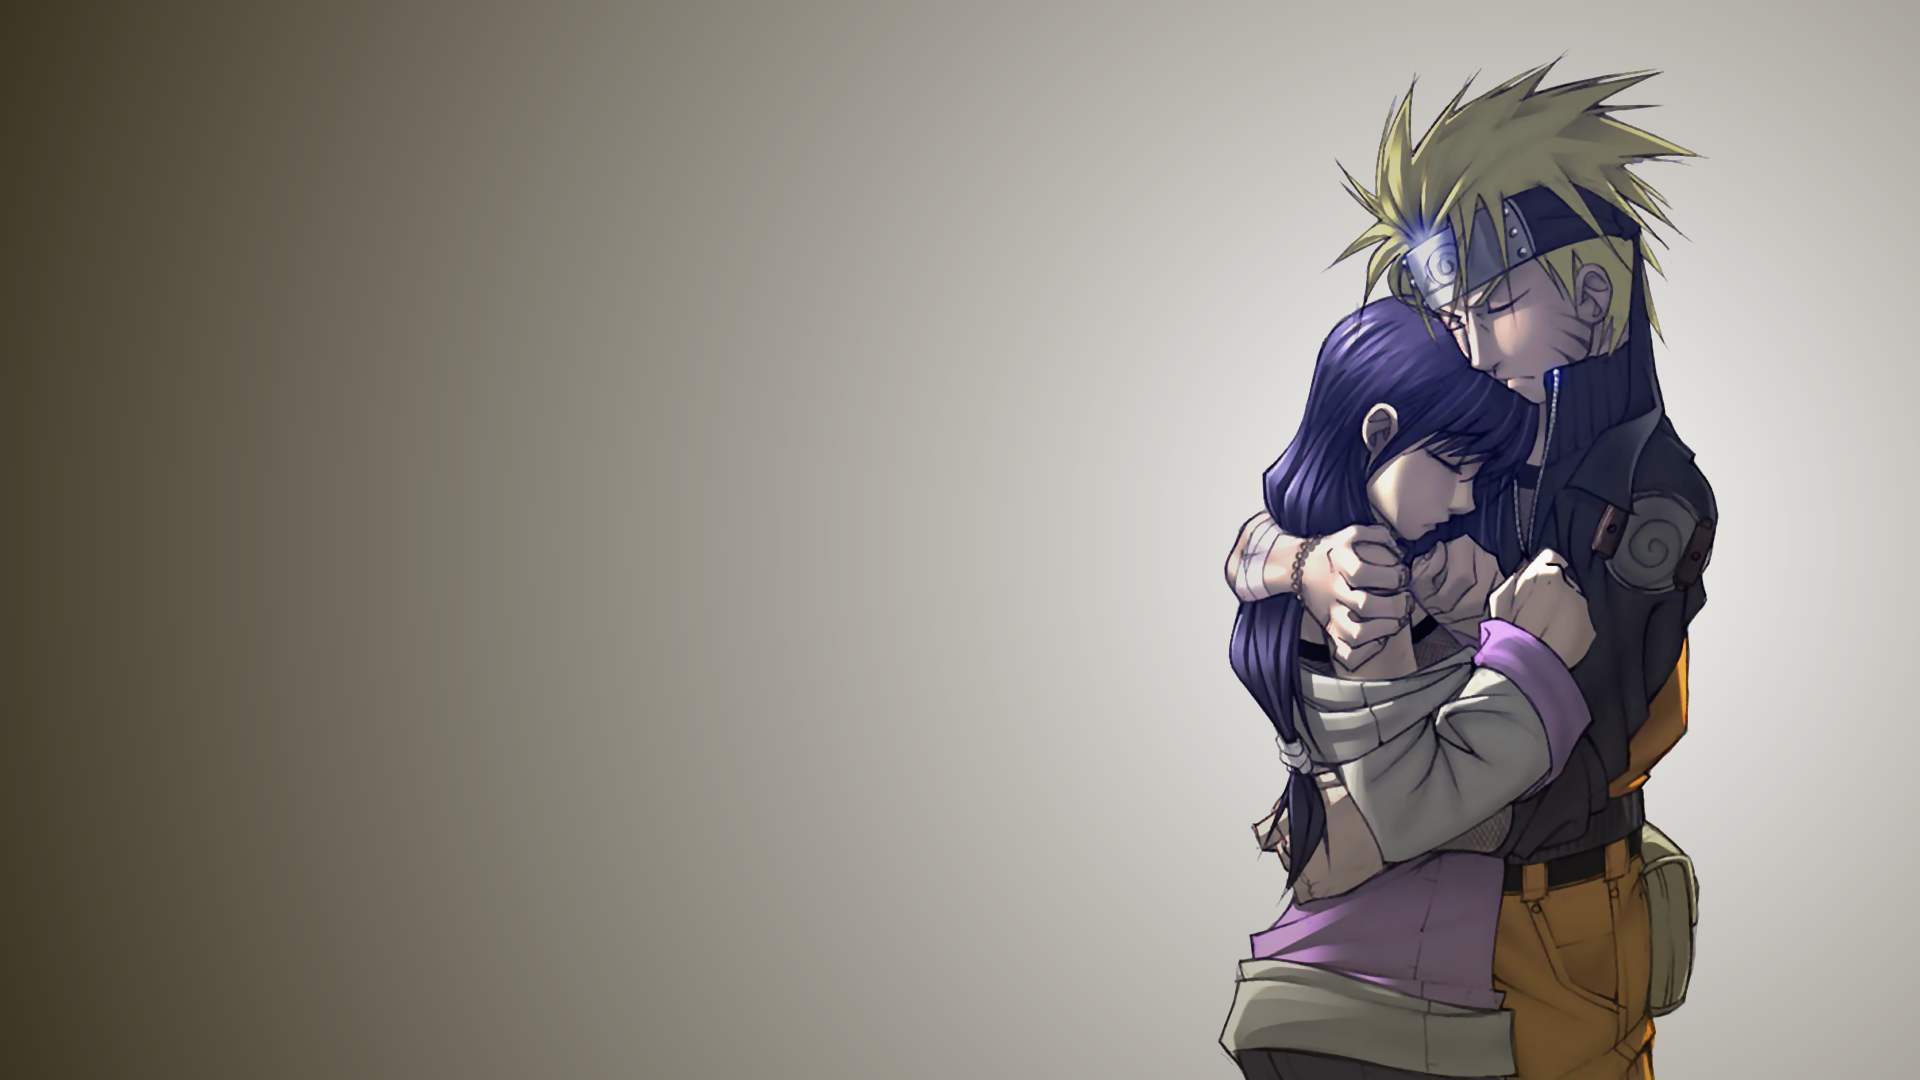 Naruto kissing his love Hinata on lovely senset evening 2K wallpaper  download